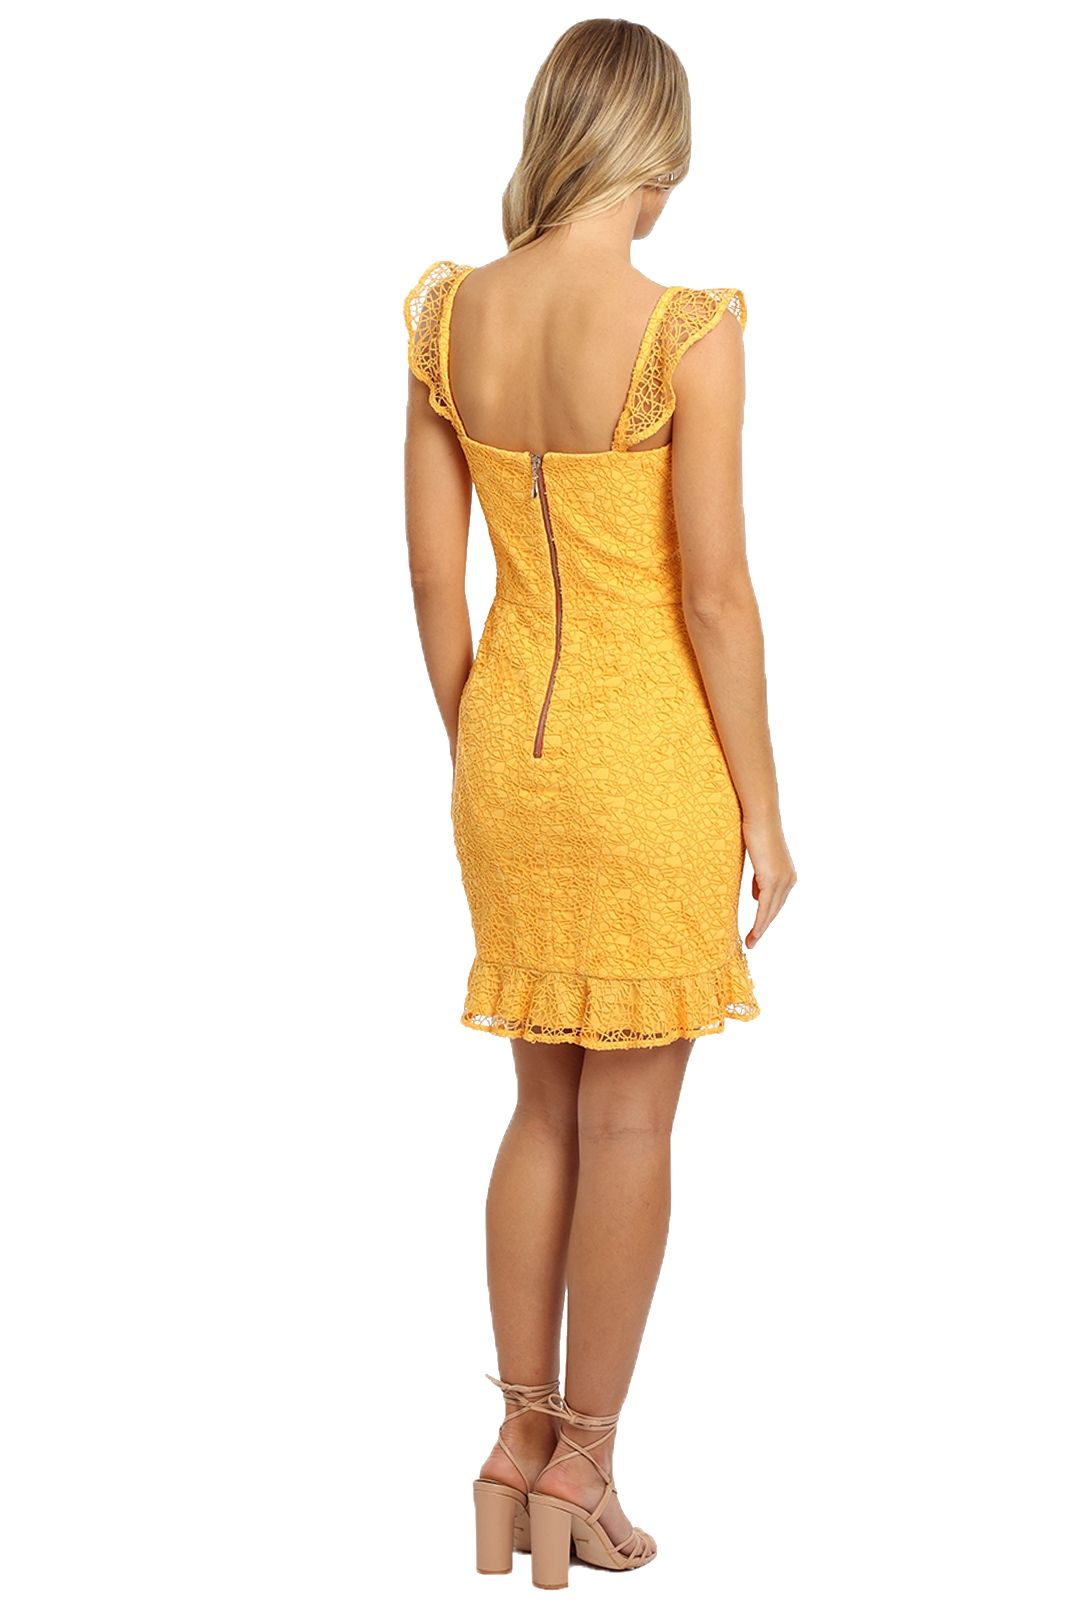 Rebecca Vallance Baha Mini Dress lace